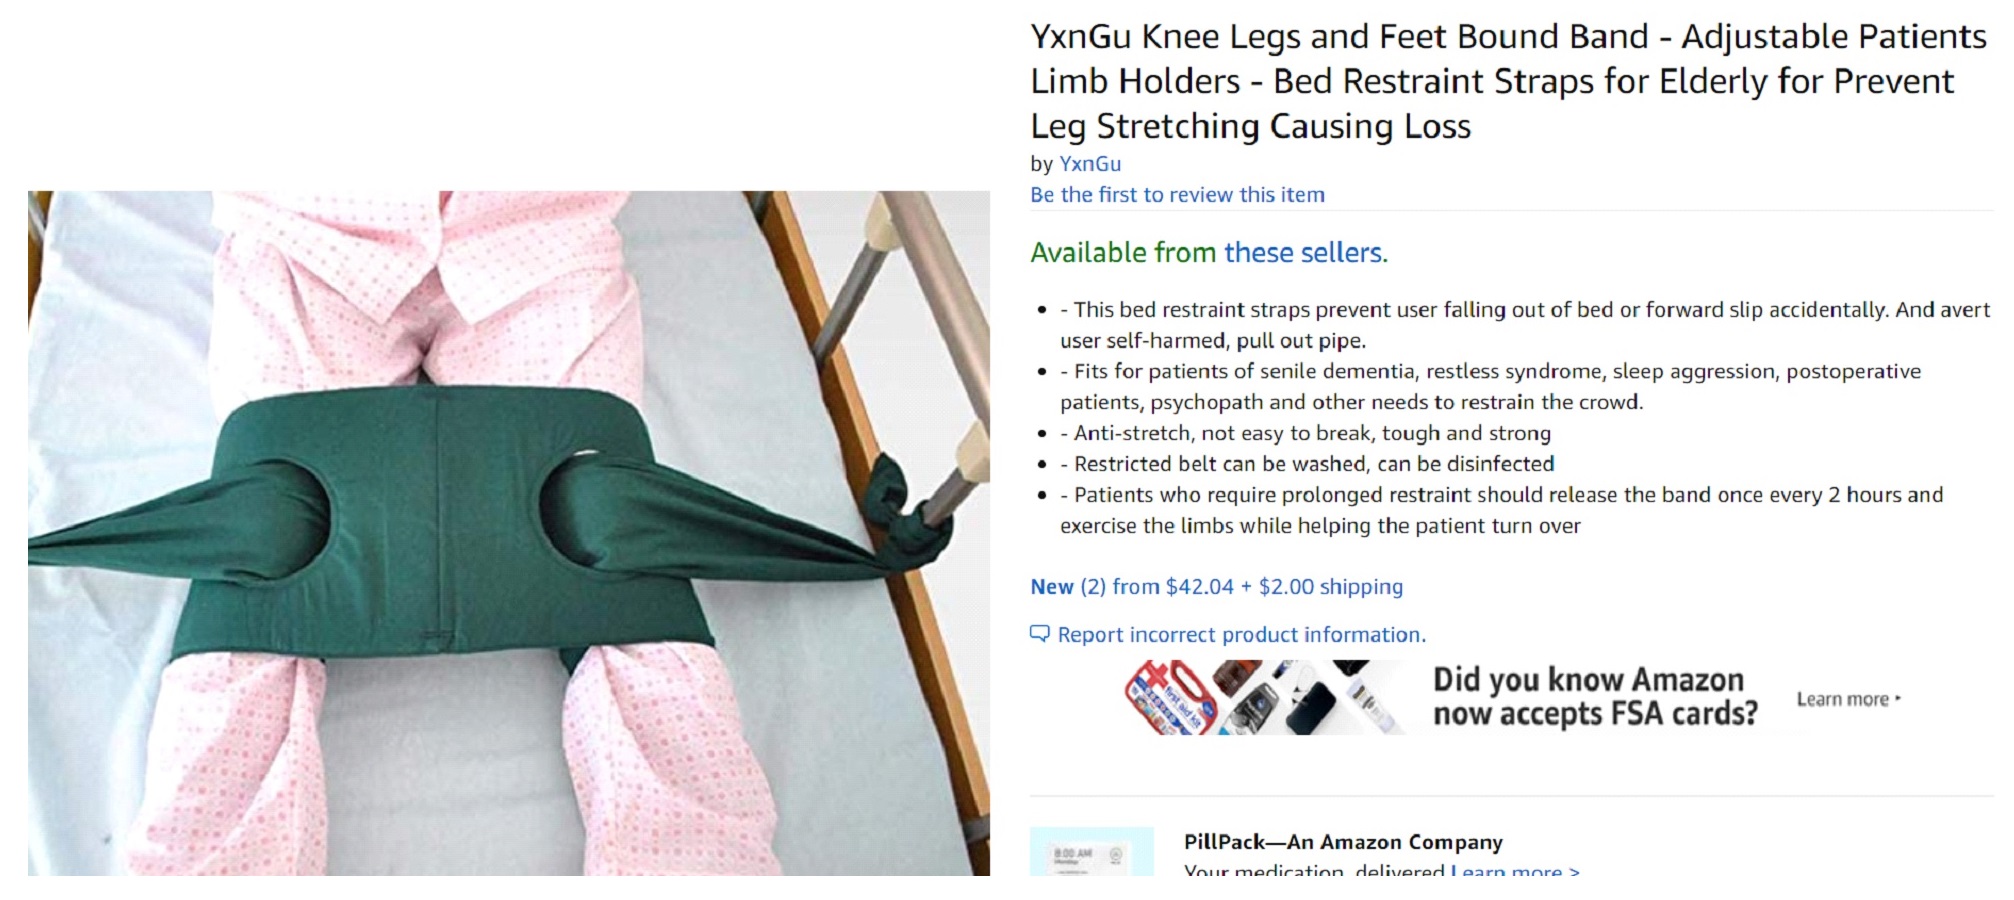 Image of YxnGu Knee Legs and Feet Bound Band.